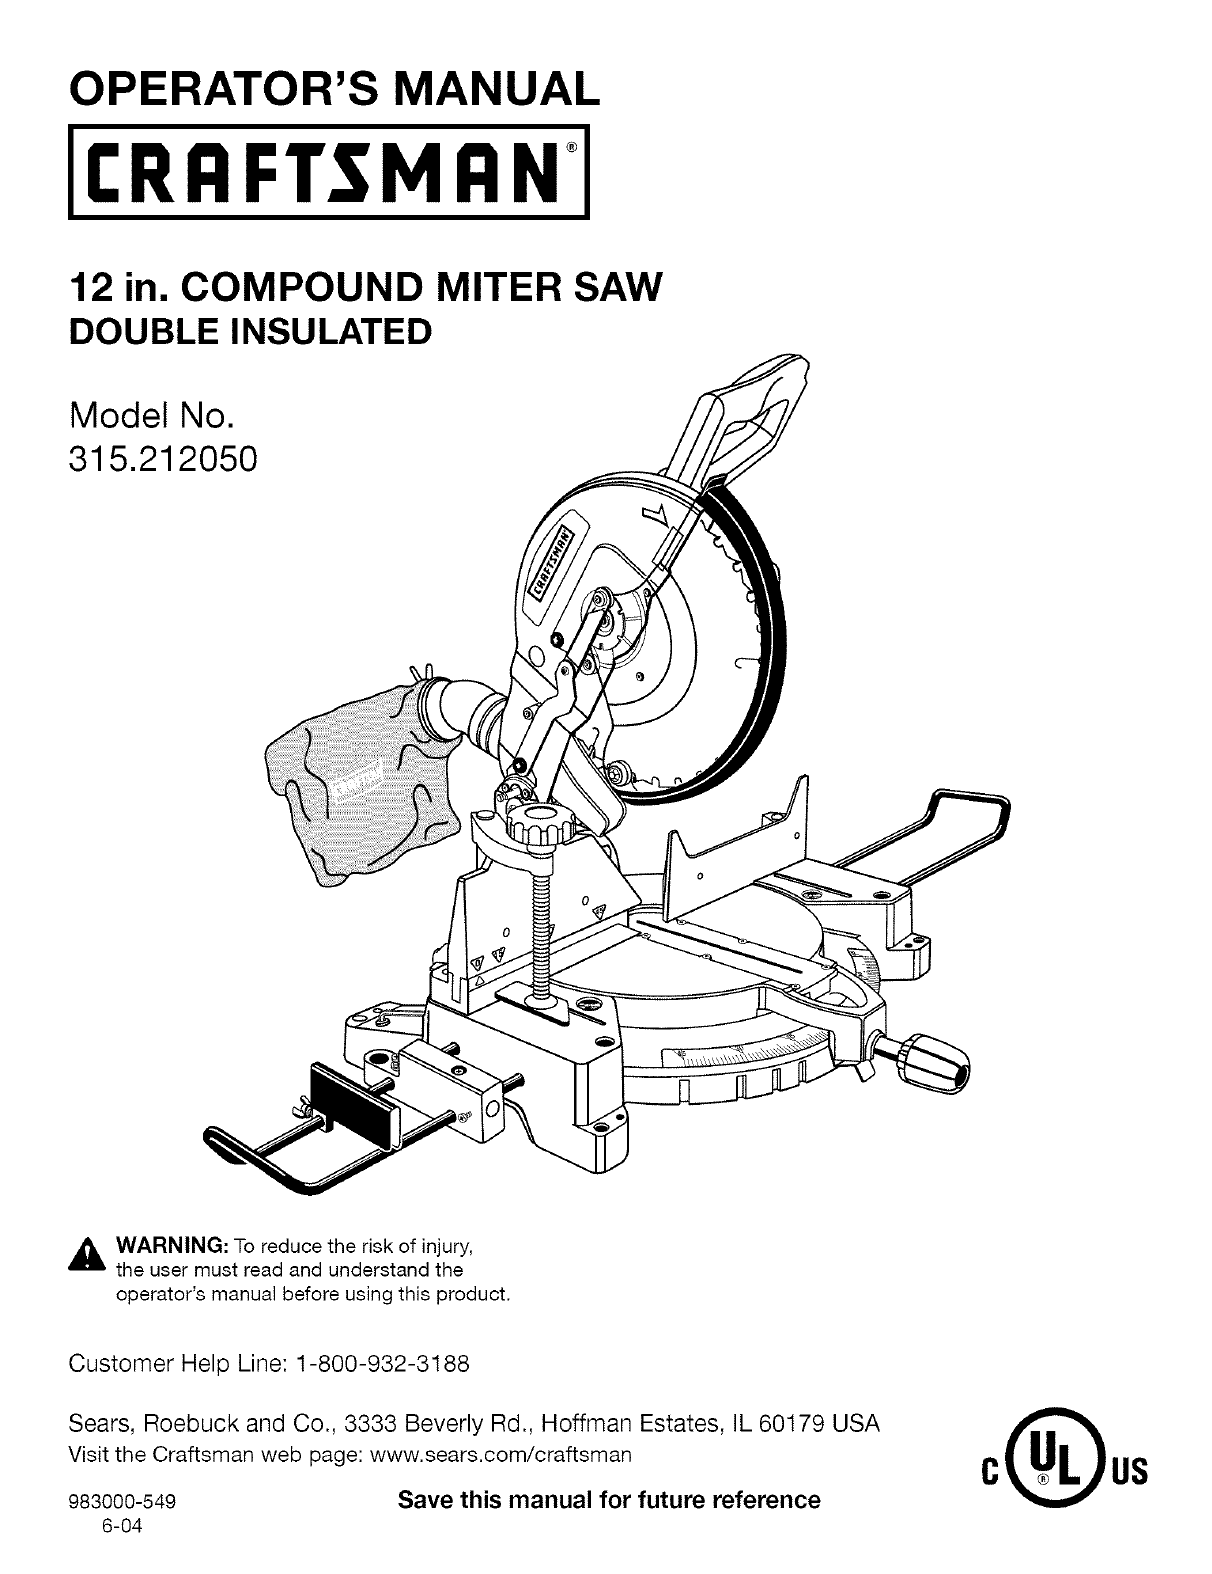 Craftsman 315212050 User Manual Miter Saw Manuals And Guides L0411285